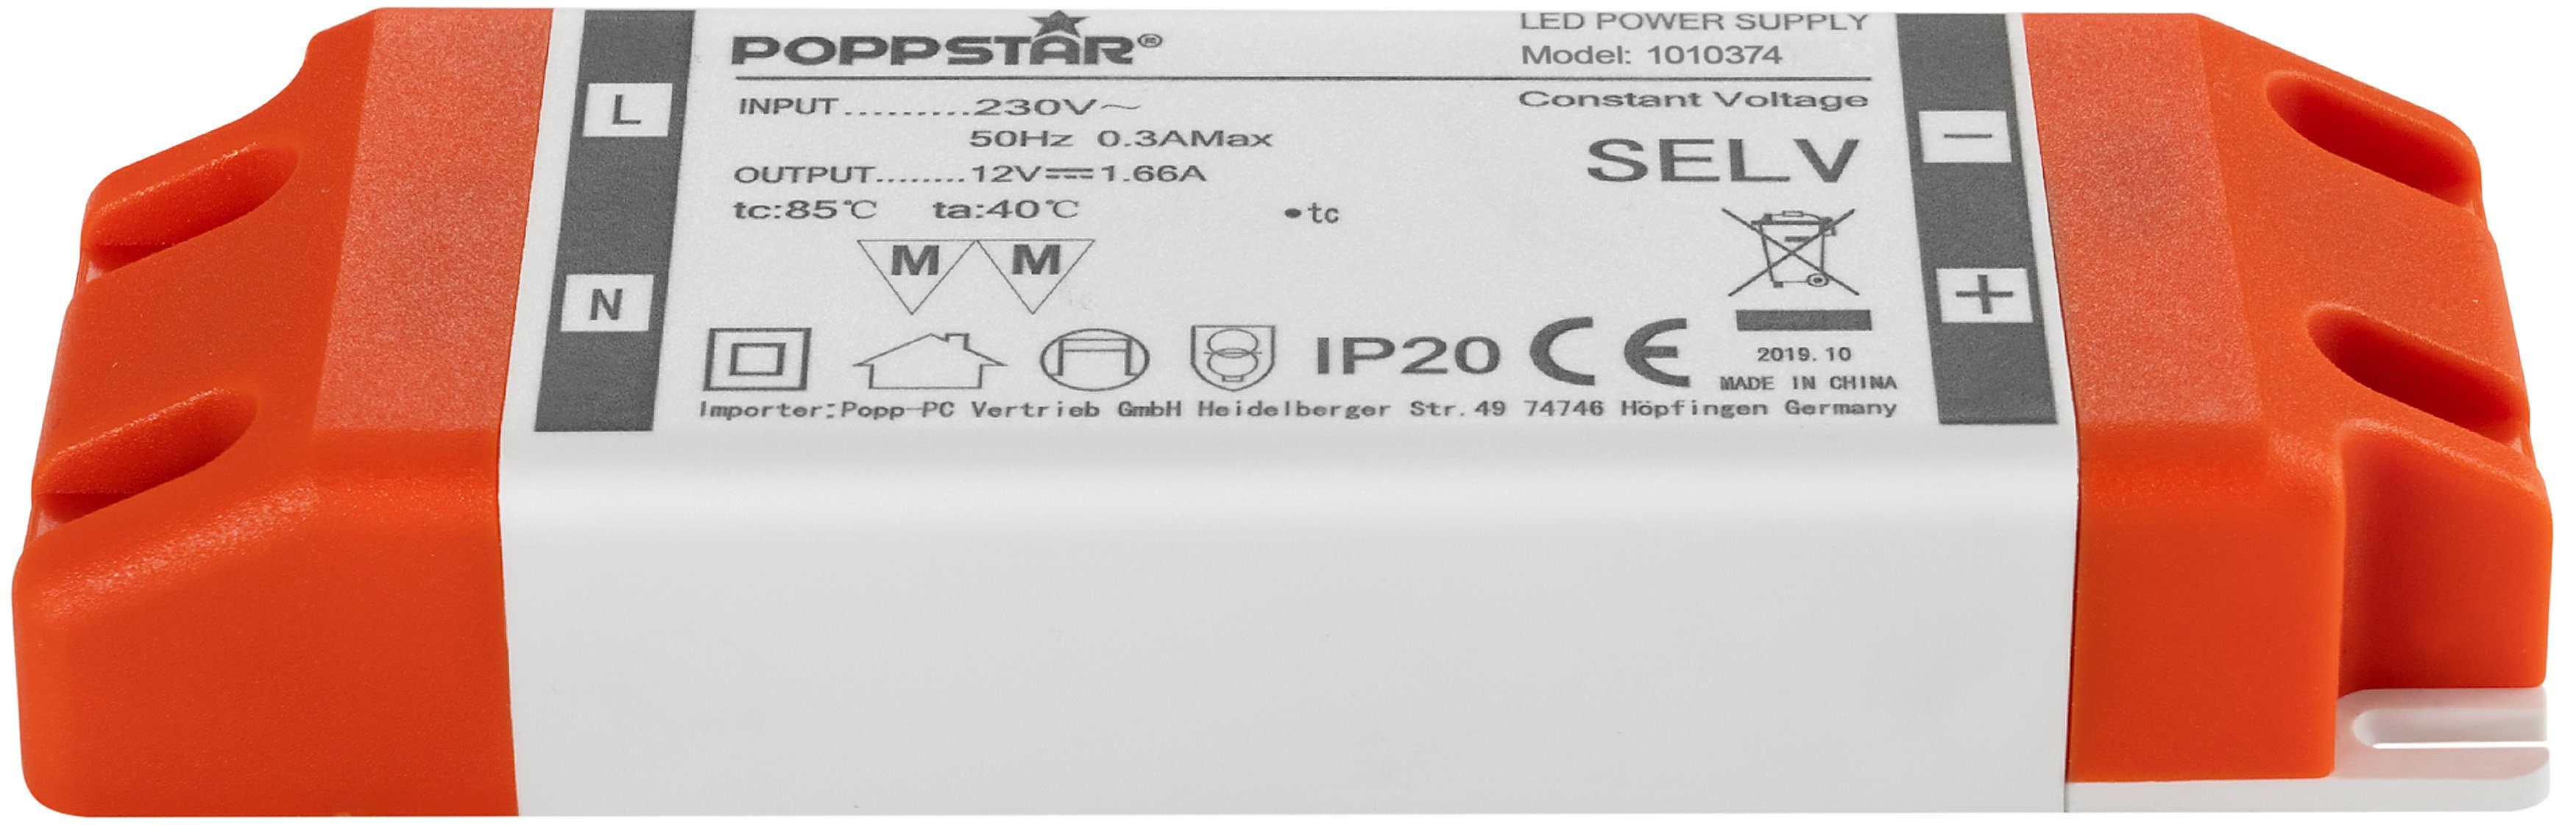 Poppstar LED Transformator 230V LED LED LED und bis 0,2 (für Strips, Bänder) Trafo Watt 20 Lampen LED 12V / AC 1,66A DC